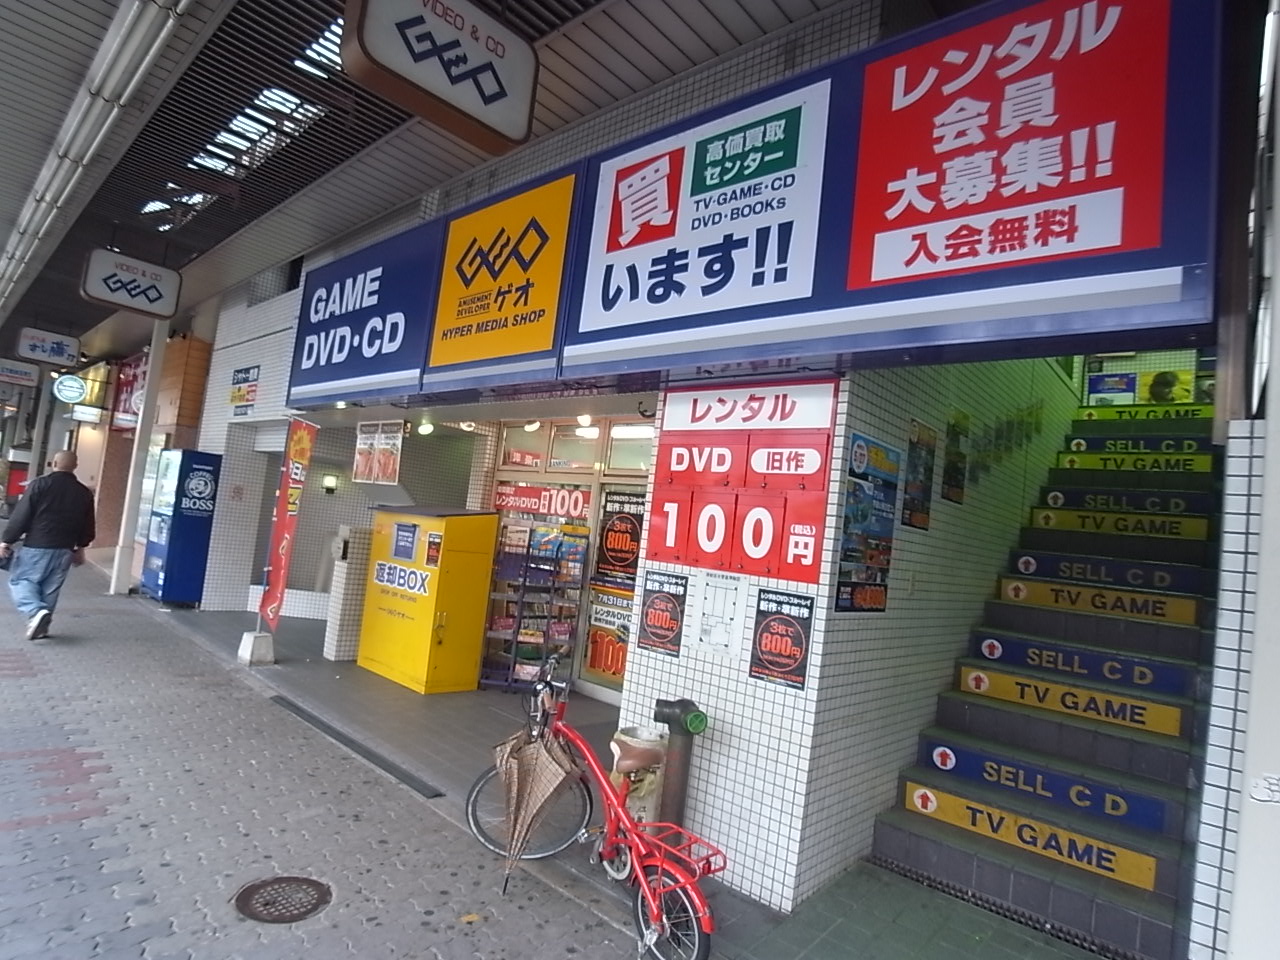 Rental video. GEO (GEO) Tsuruma shop 640m up (video rental)